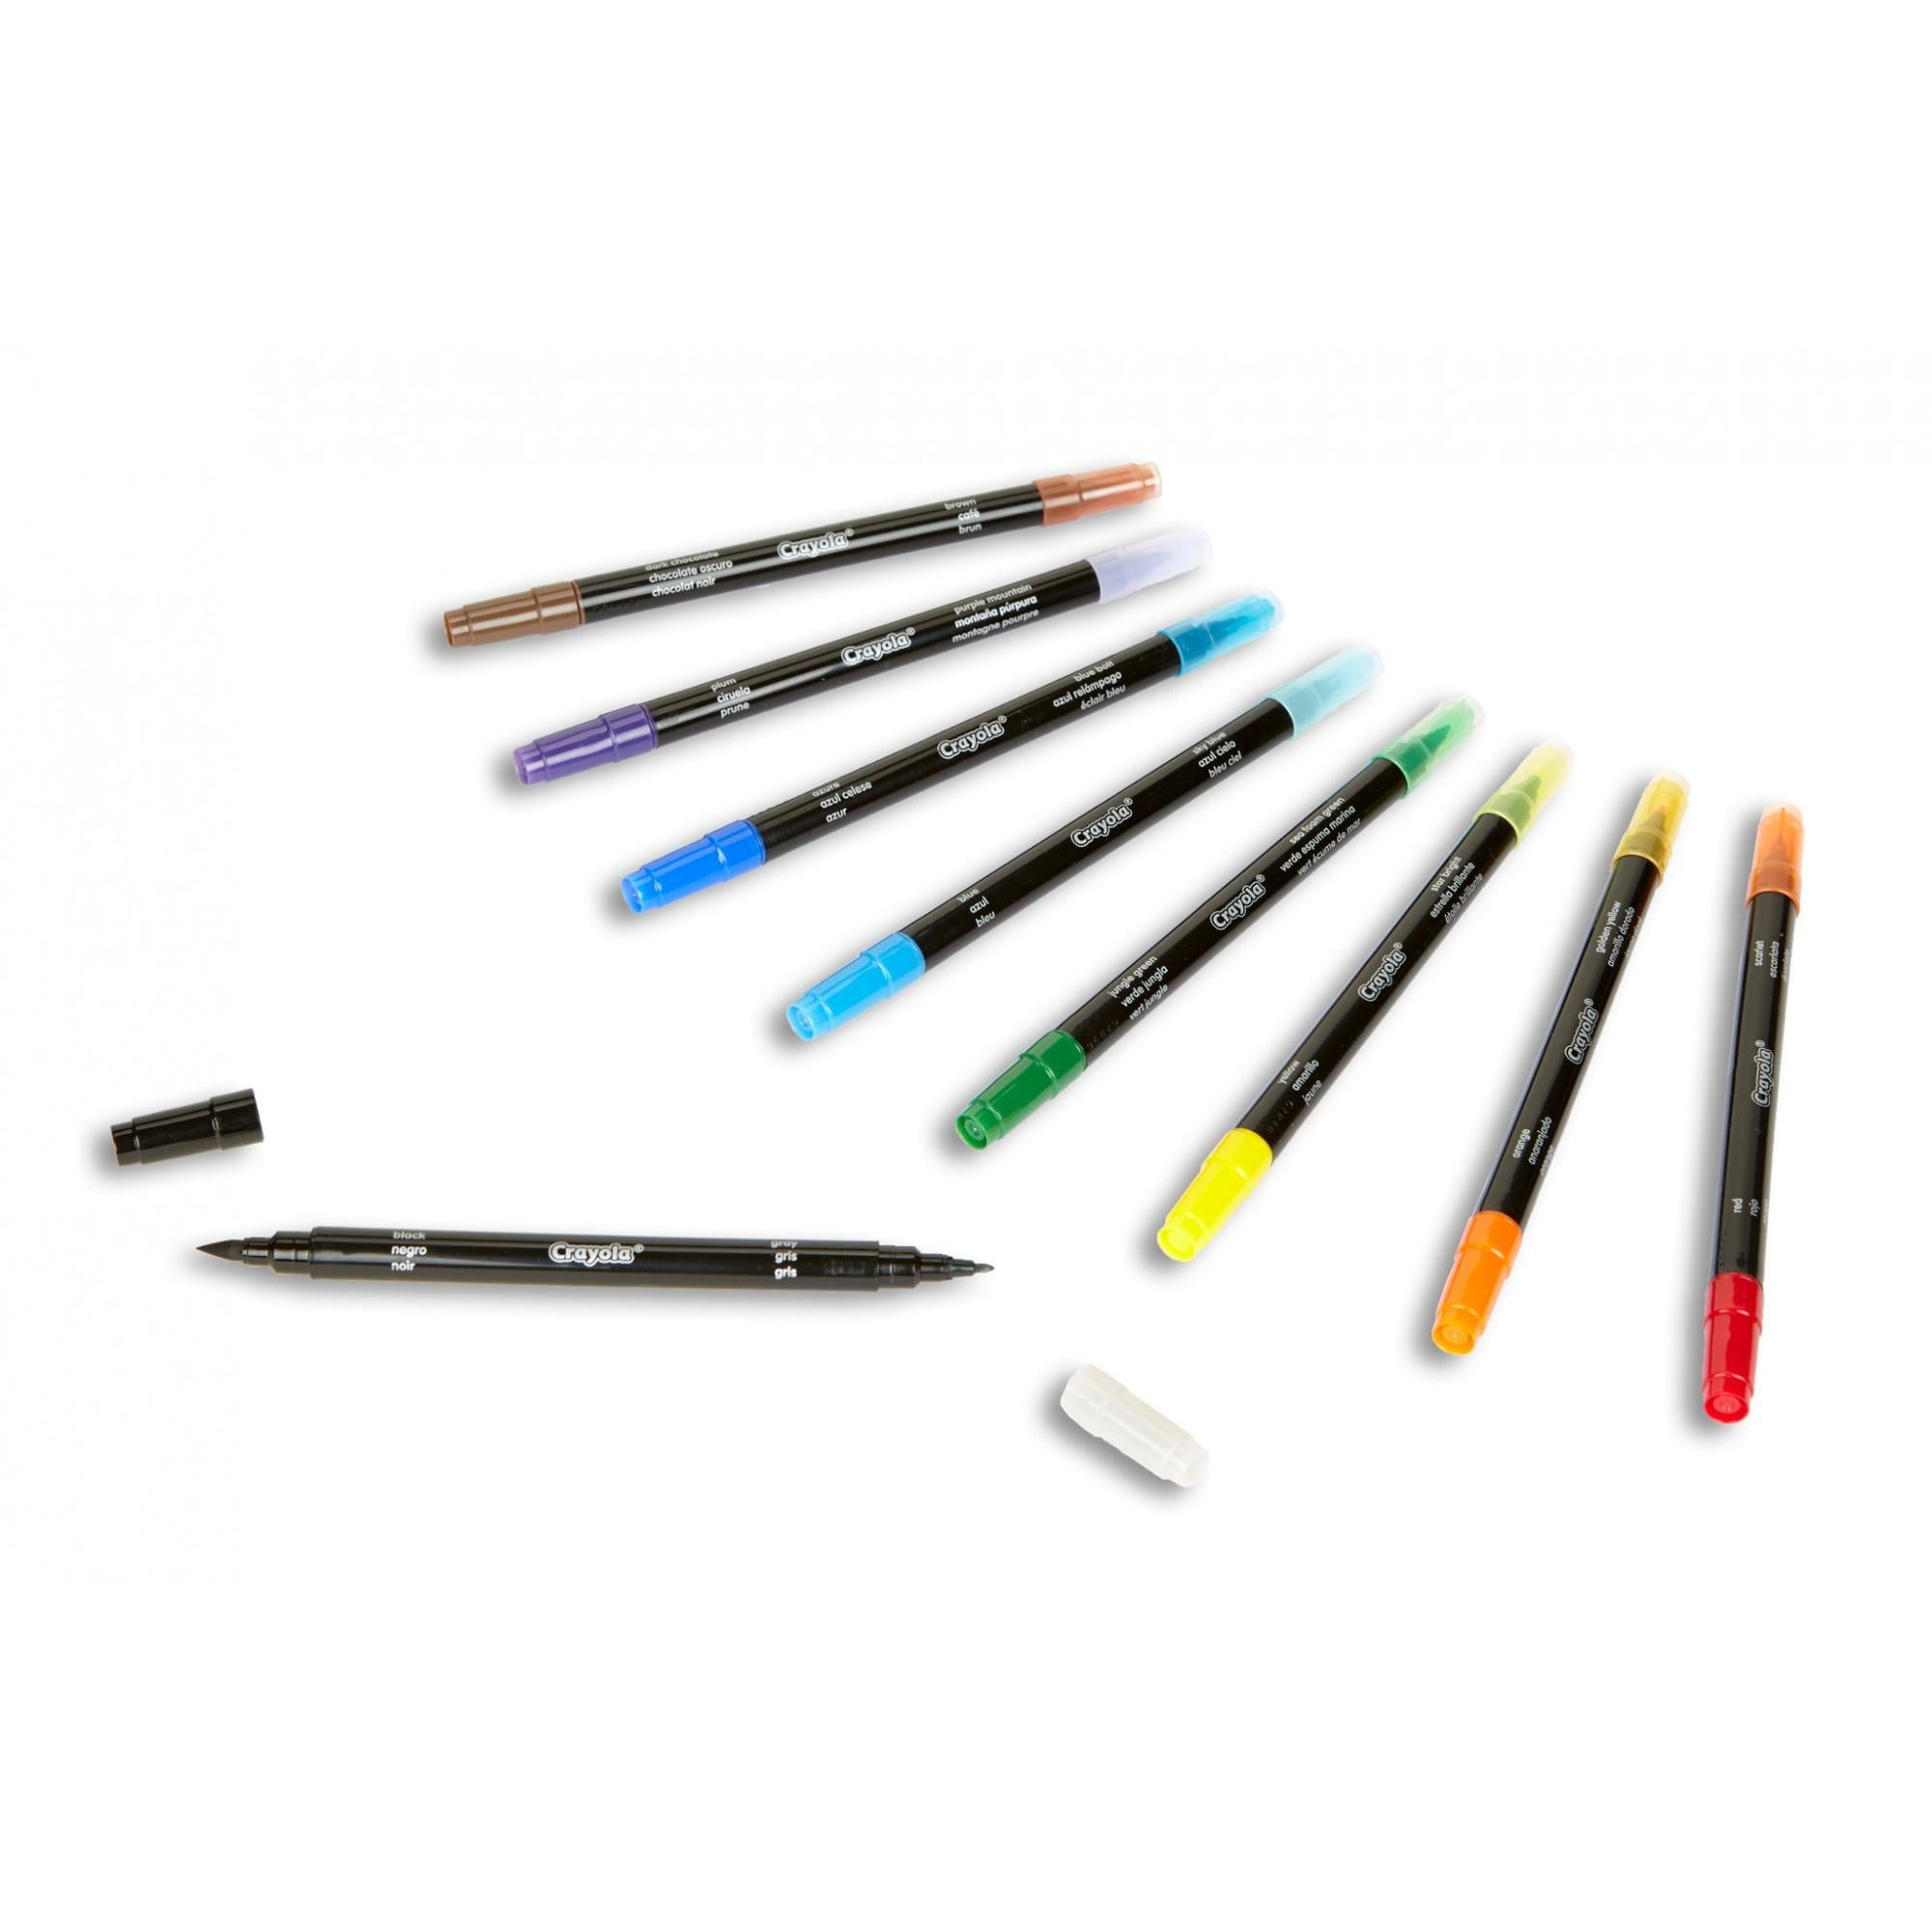 Crayola Signature Brush and Detail Dual-Tip Markers, 16 pk - Kroger